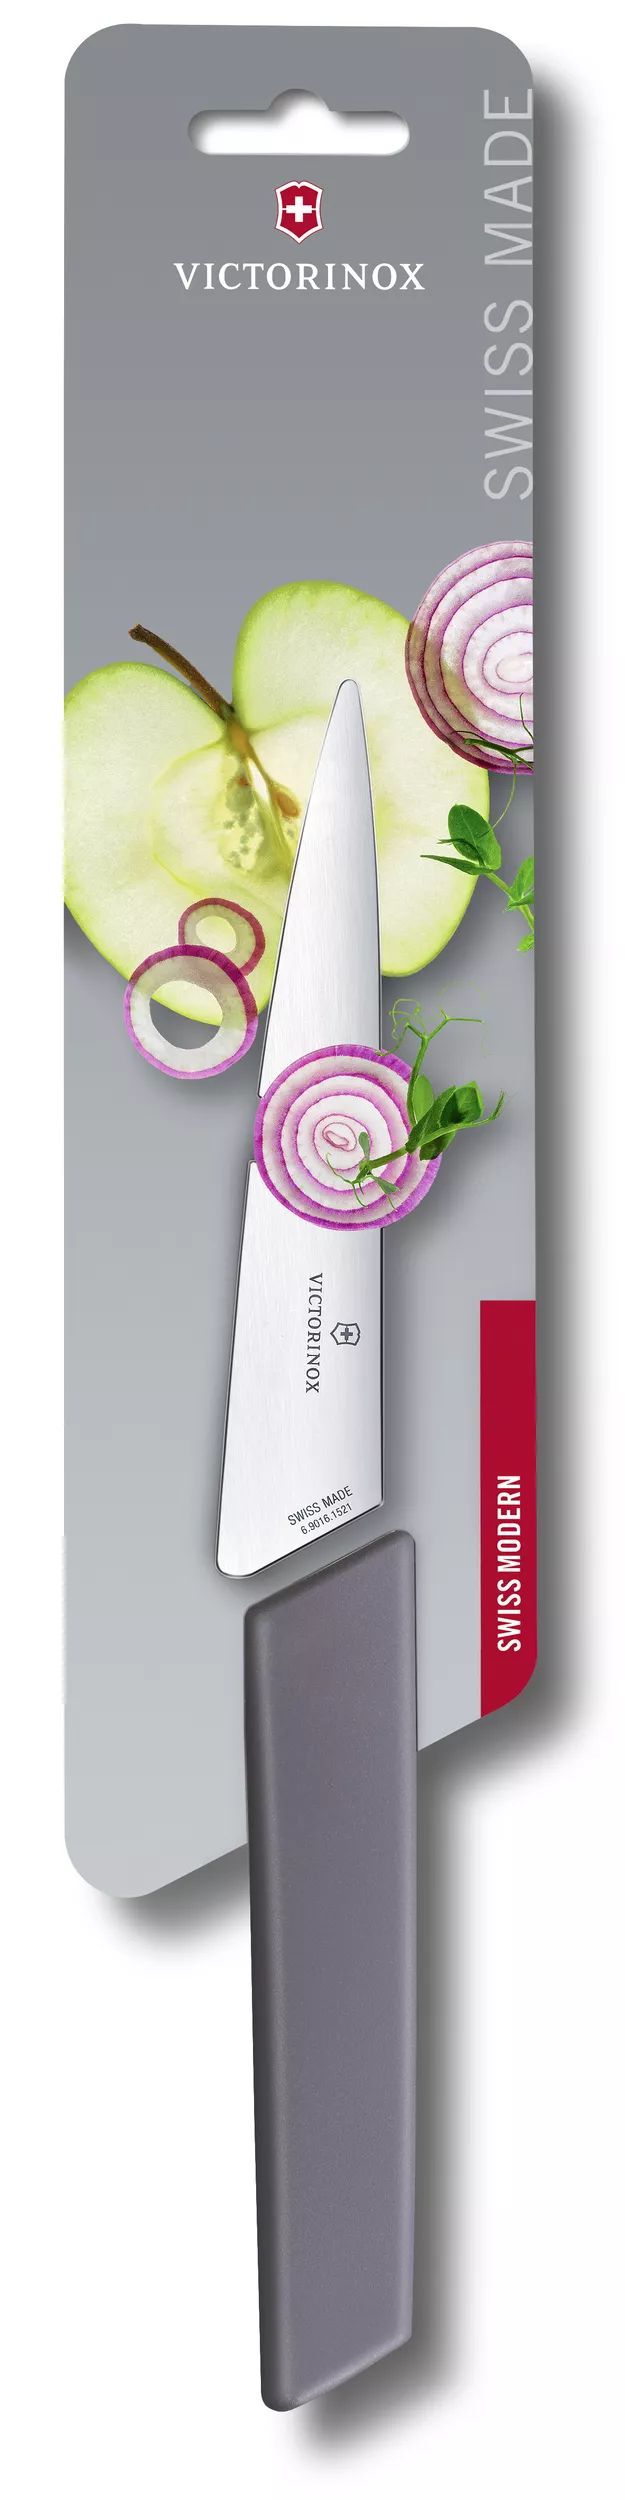 Swiss Modern Chef's Knife - null